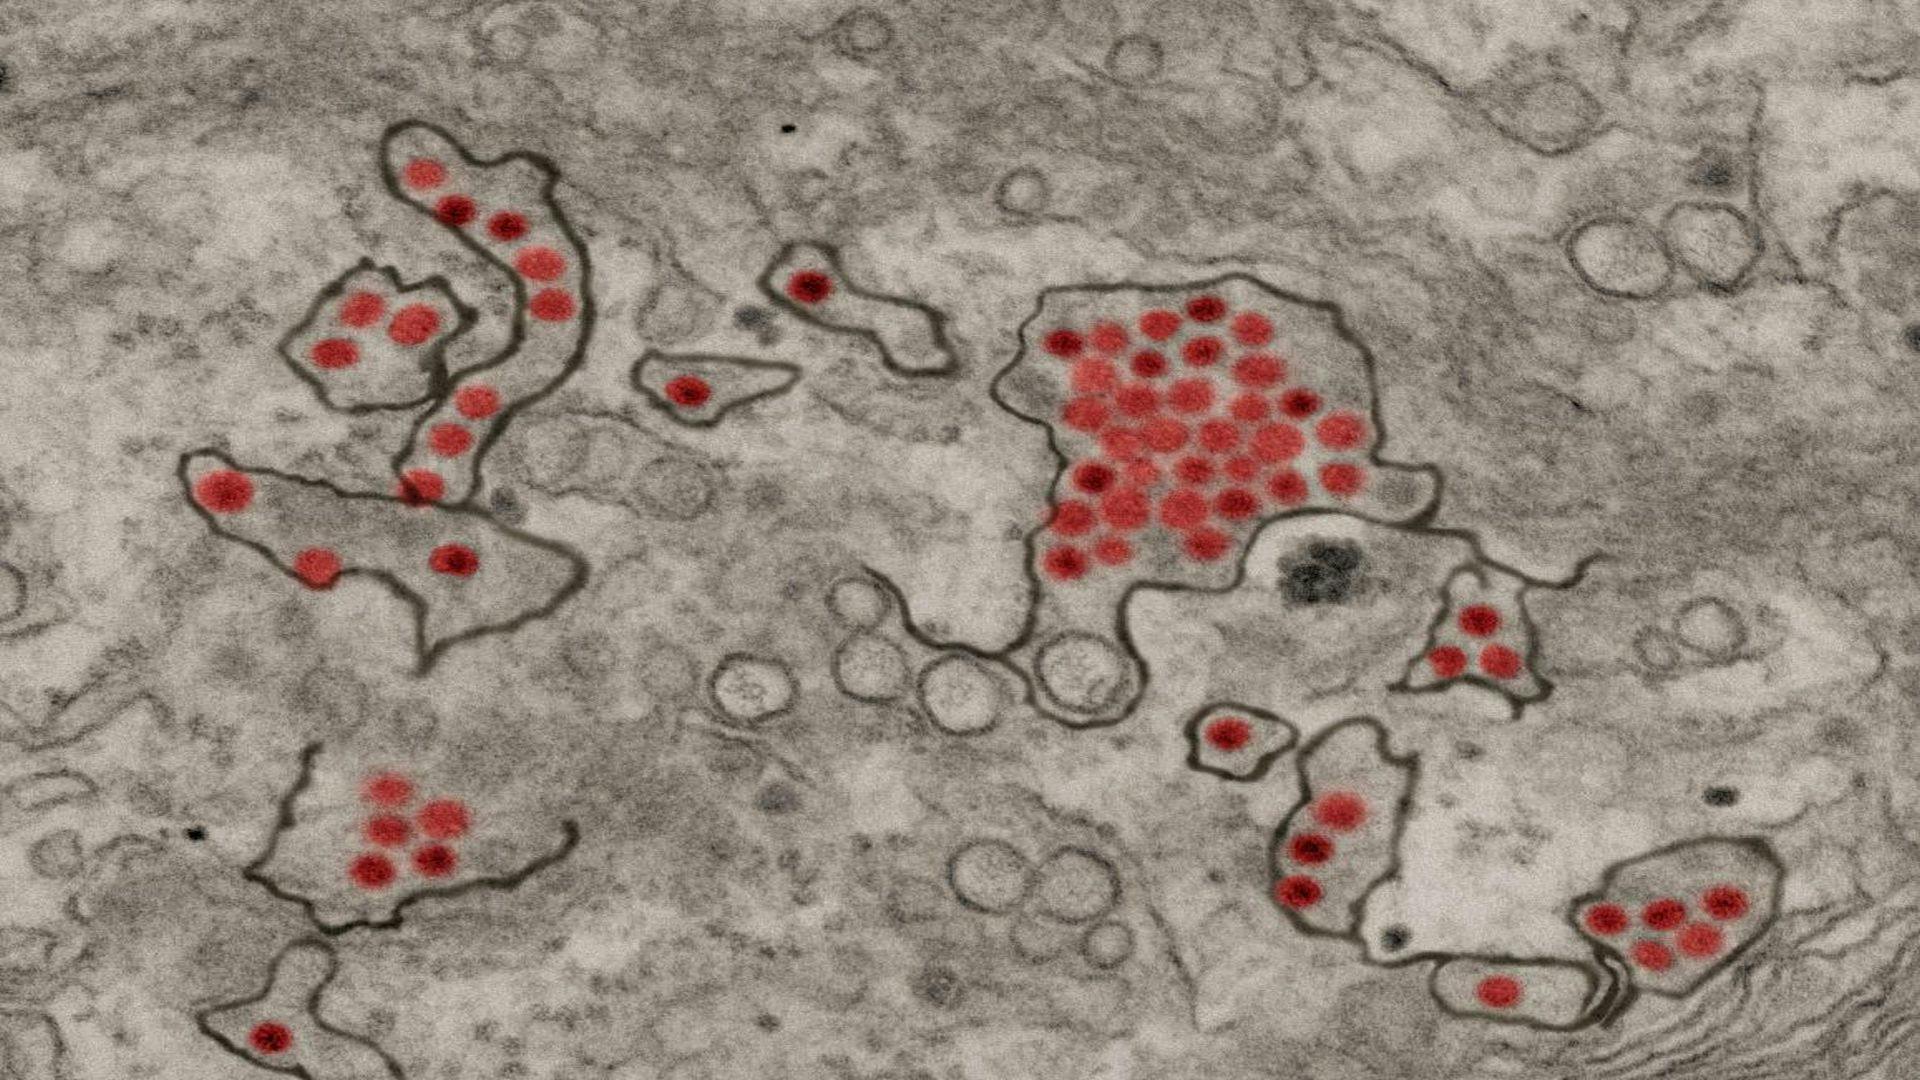 Monoclonal Antibodies Against Zika Show Promise in Primate Study